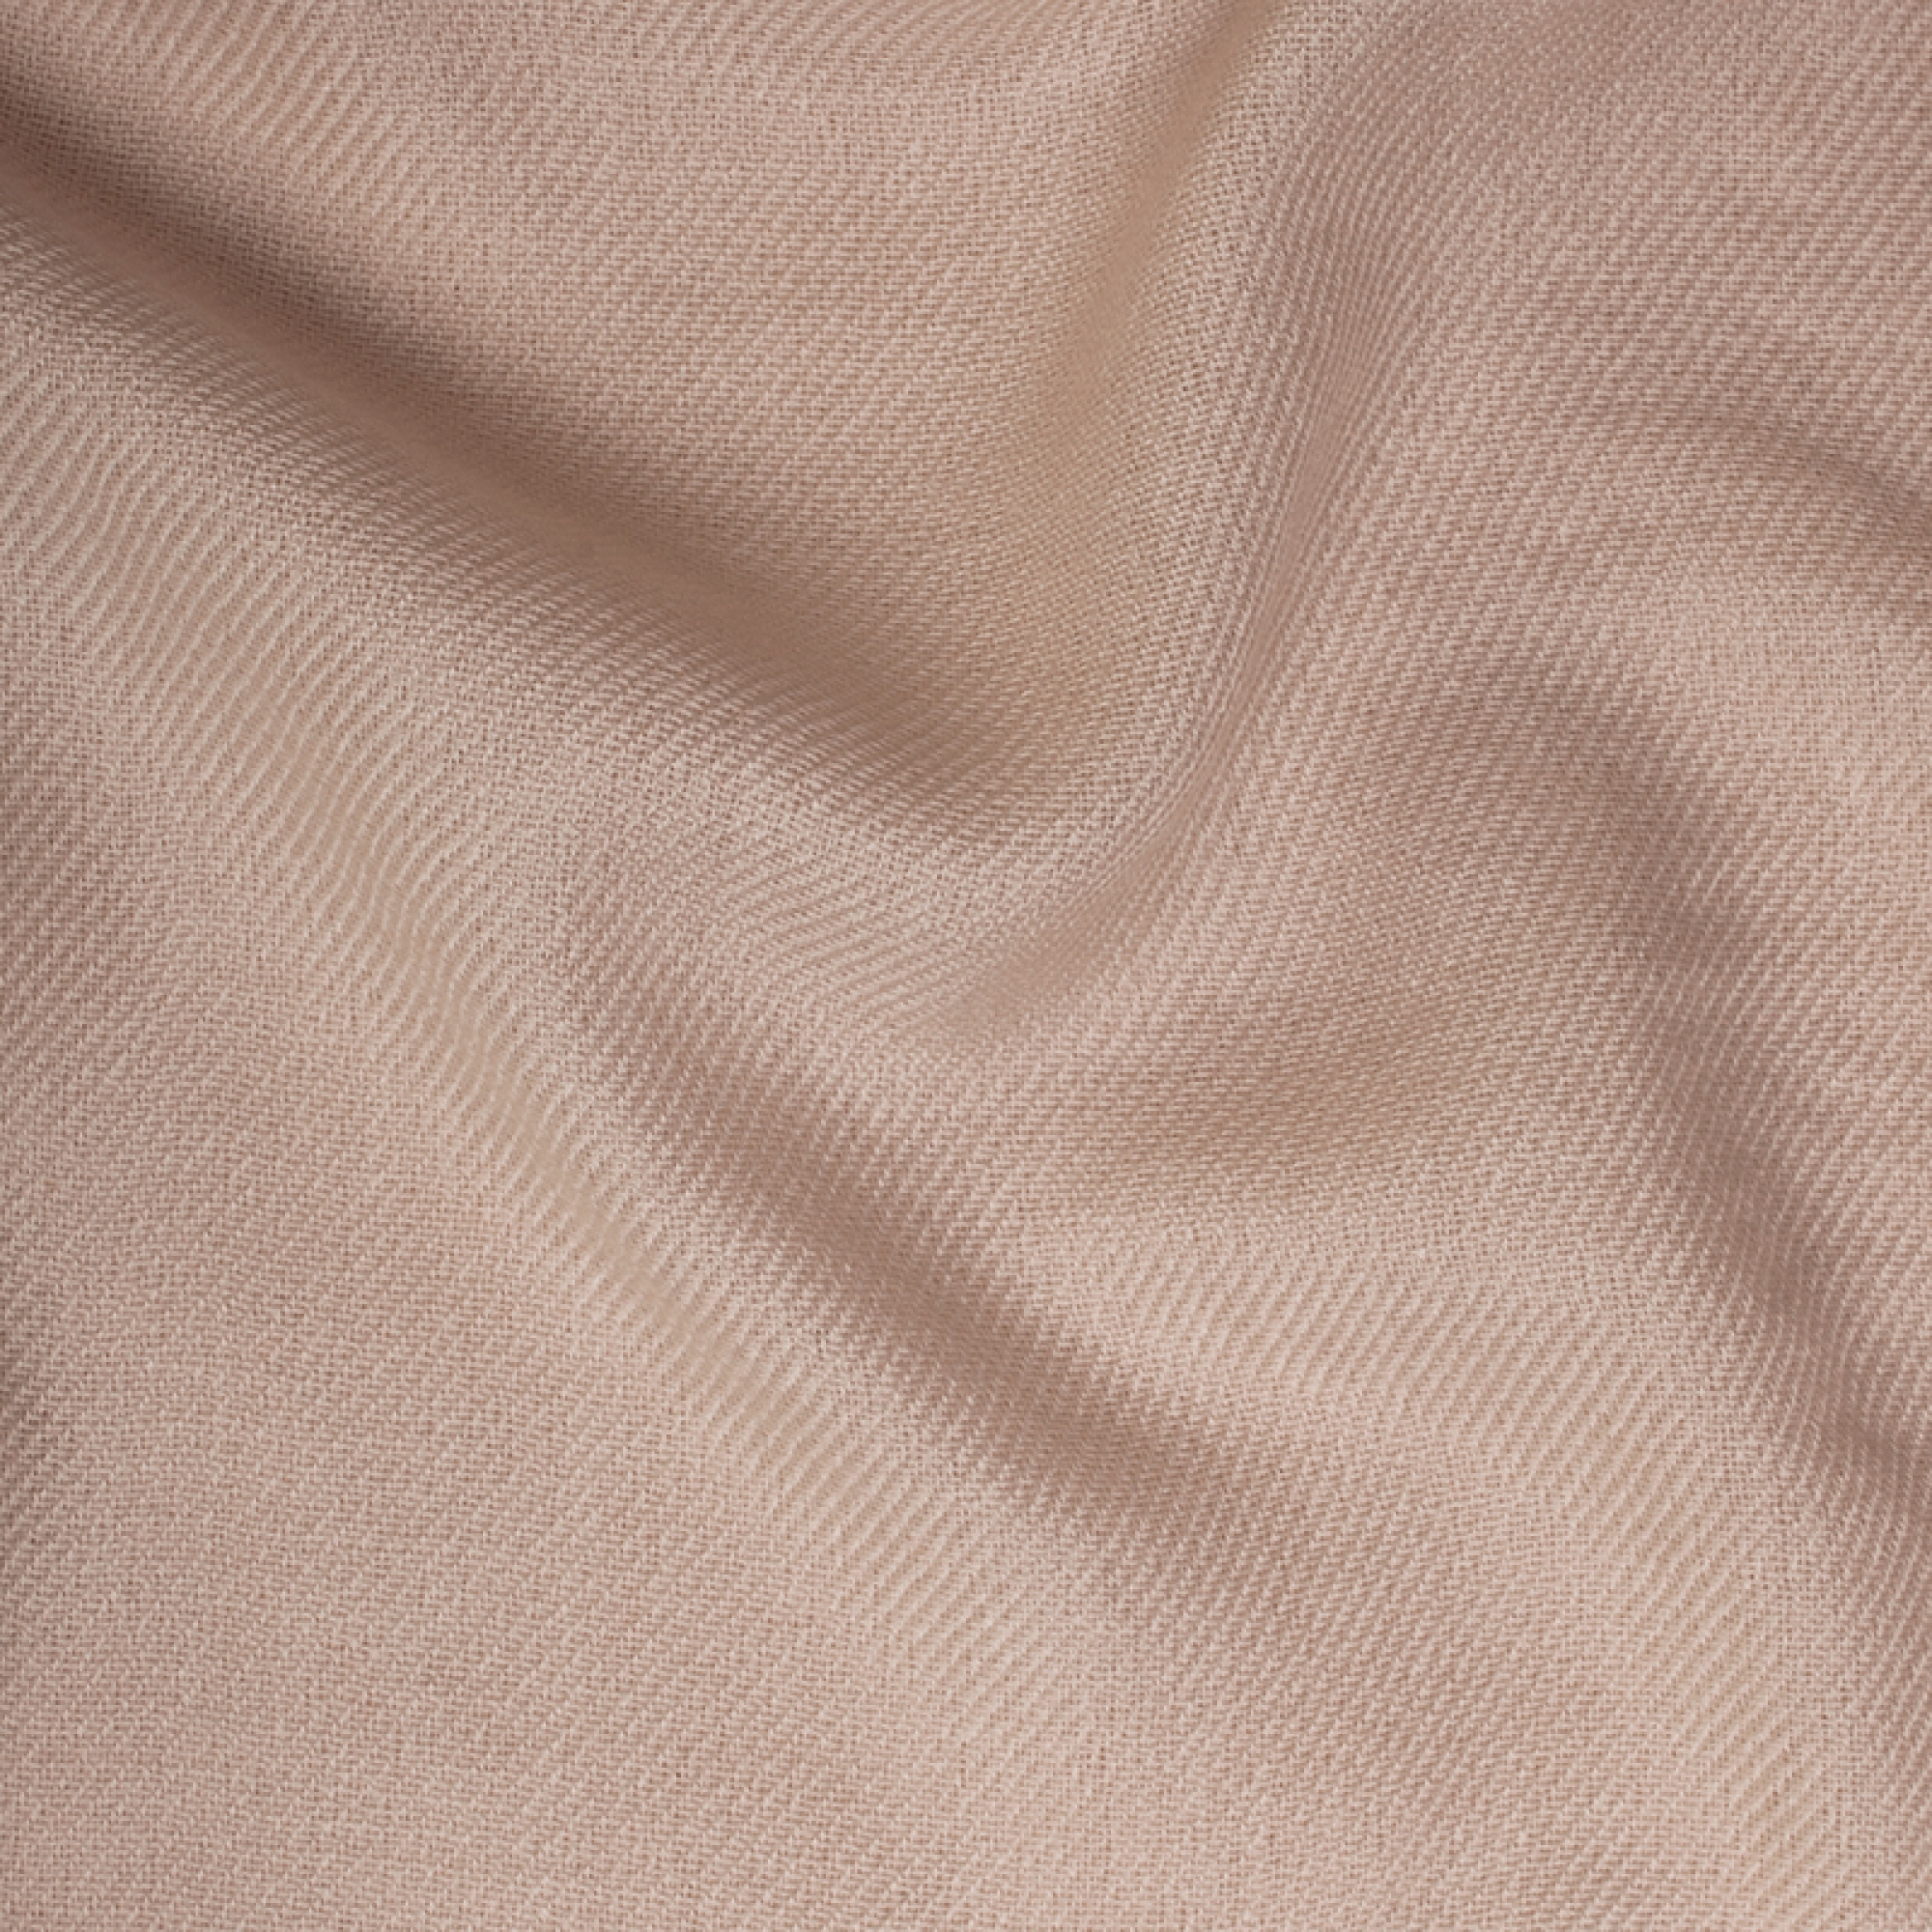 Cashmere accessories blanket toodoo plain l 220 x 220 crystal grey 220x220cm